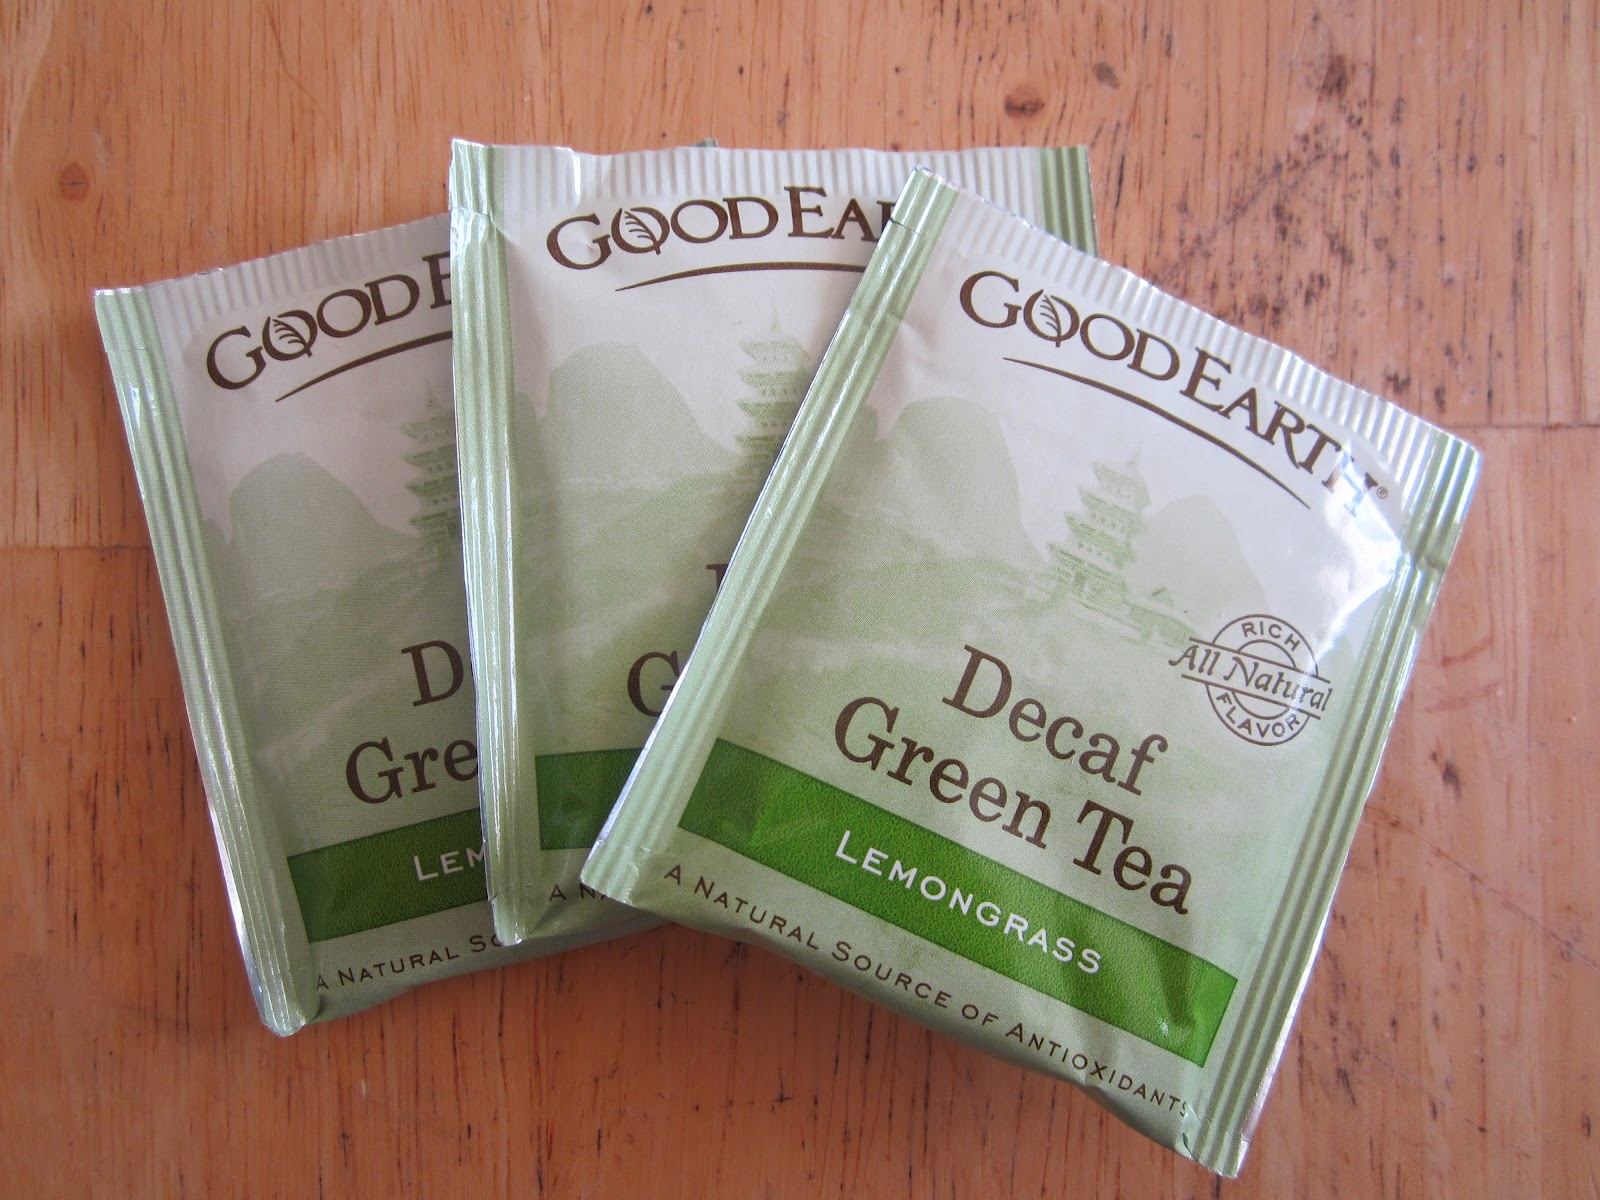 Does Good Earth tea receive good reviews?